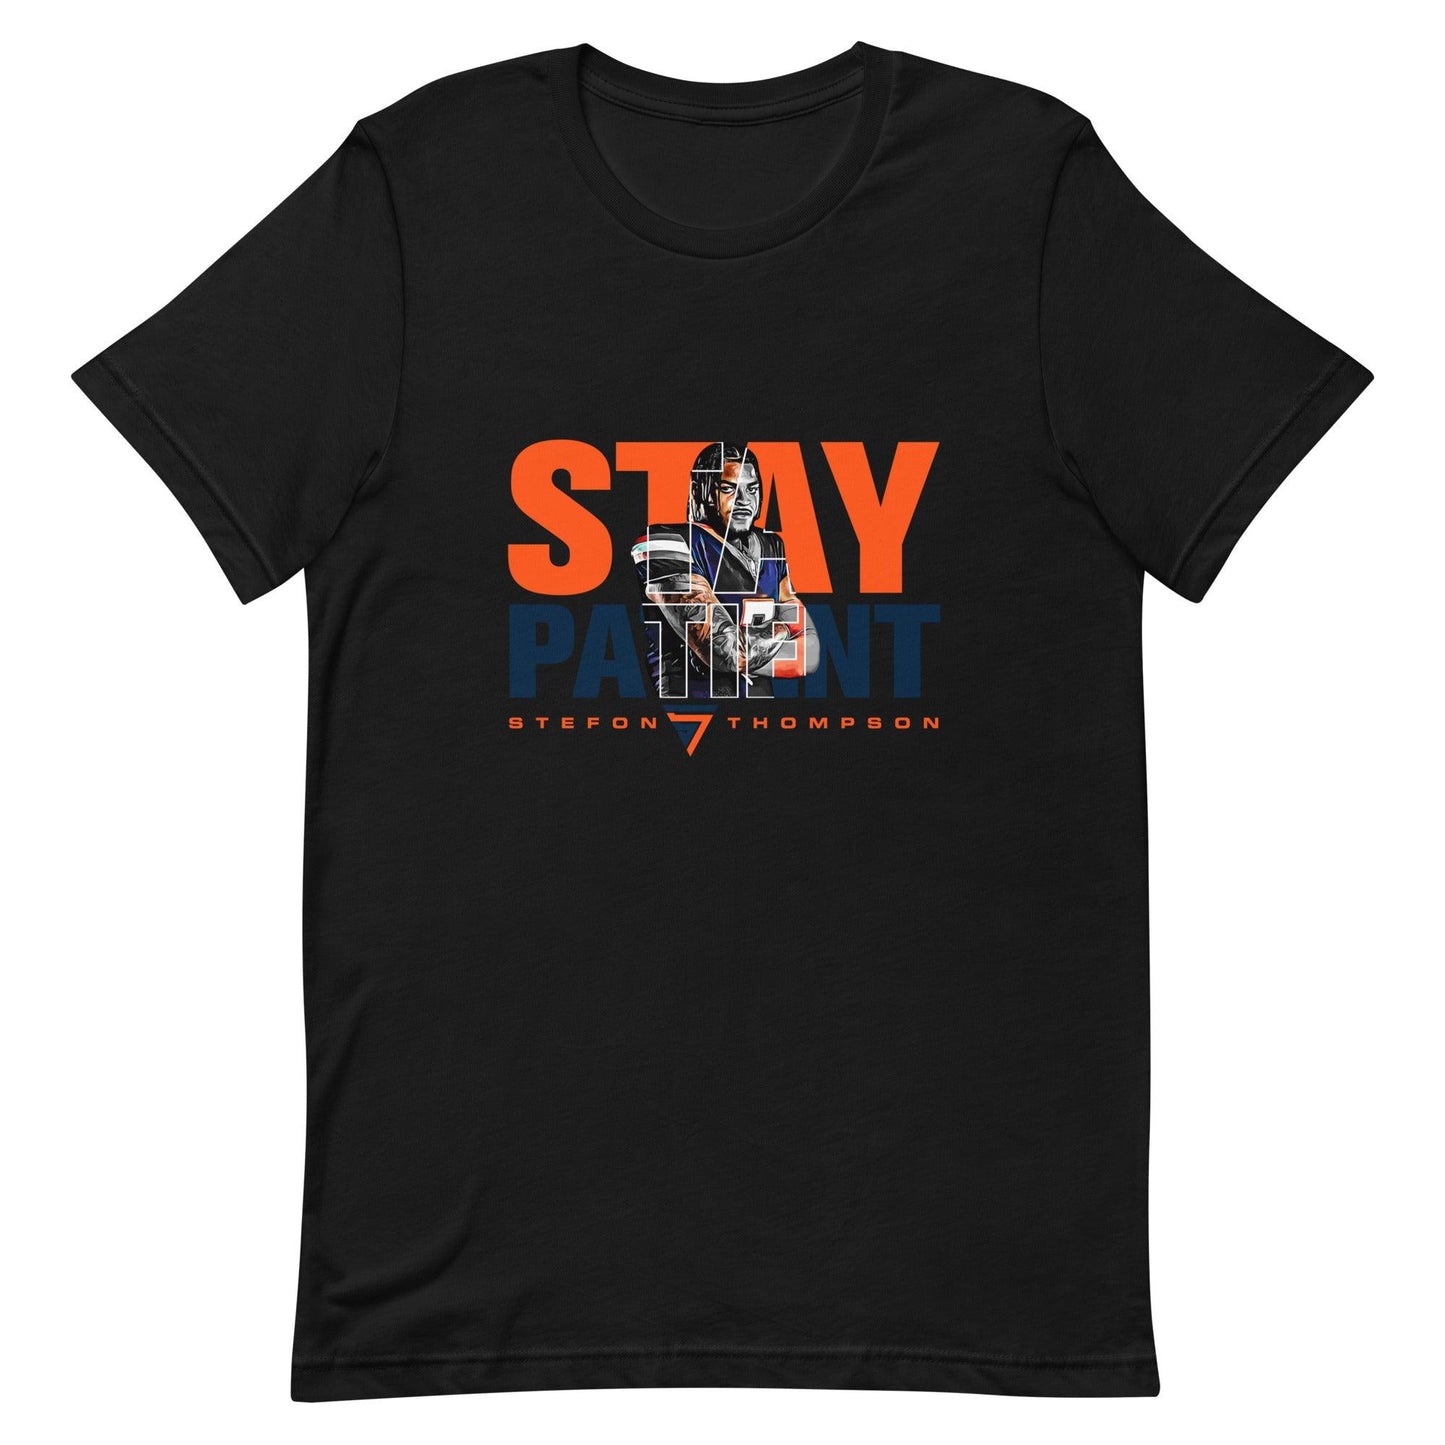 Stefon Thompson "Stay Patient" t-shirt - Fan Arch